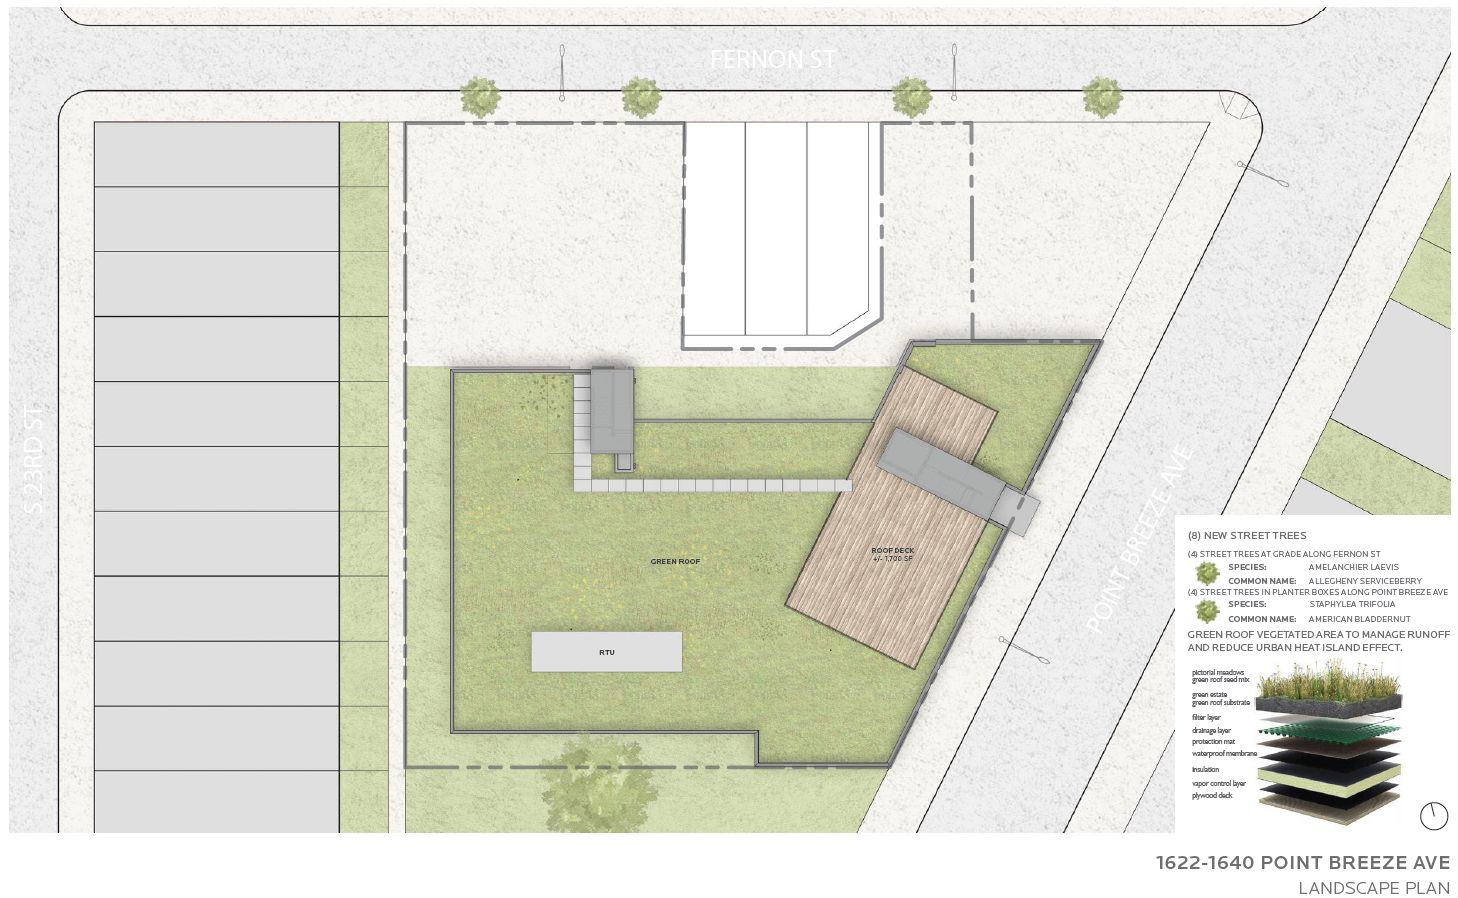 1622-40 Point Breeze Avenue. Plan - roof. Credit: JKRP Architects via the Civic Design Review